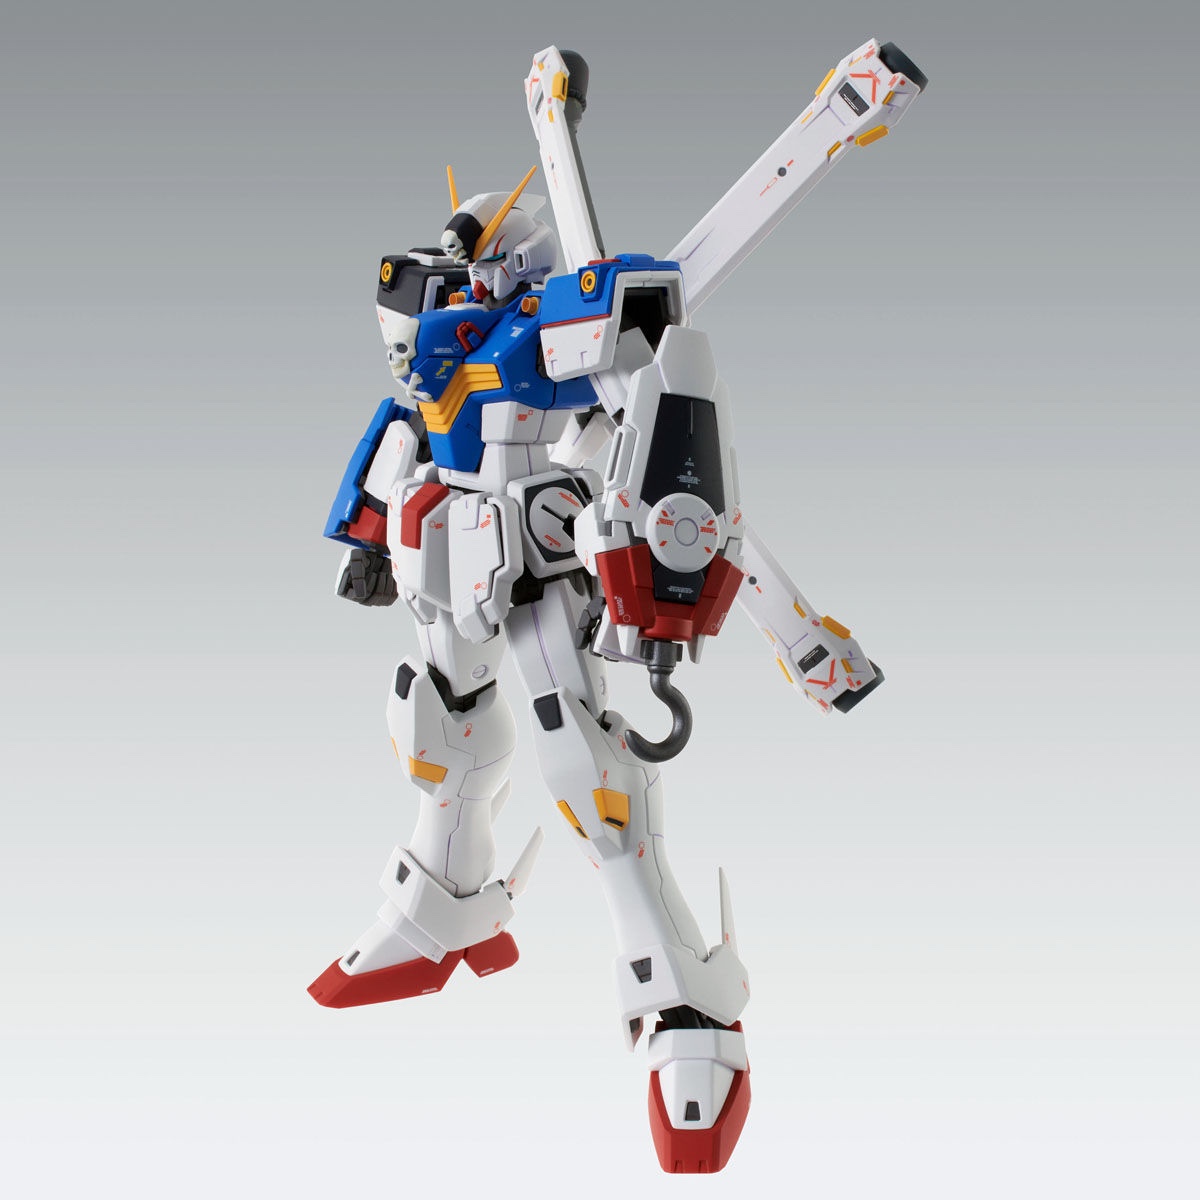 Bandai spirits 1/100 MG XM-X1 Gundam X1 Ver.Ka Patchwork